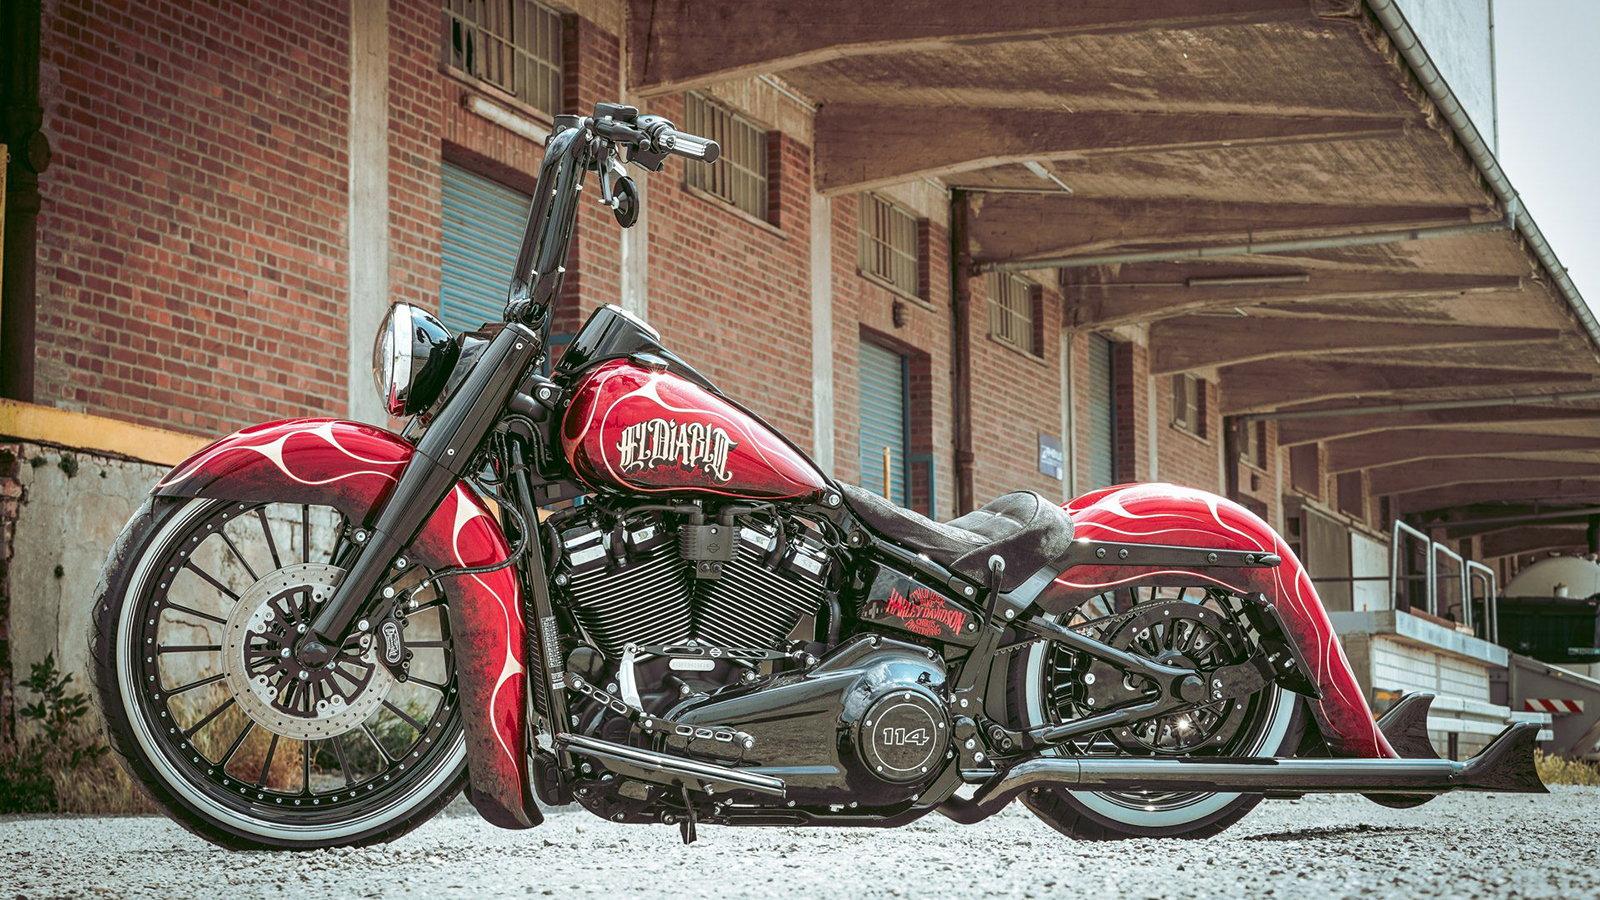 Harley-Davidson Decal Cut to Shape at Thunderbike Shop